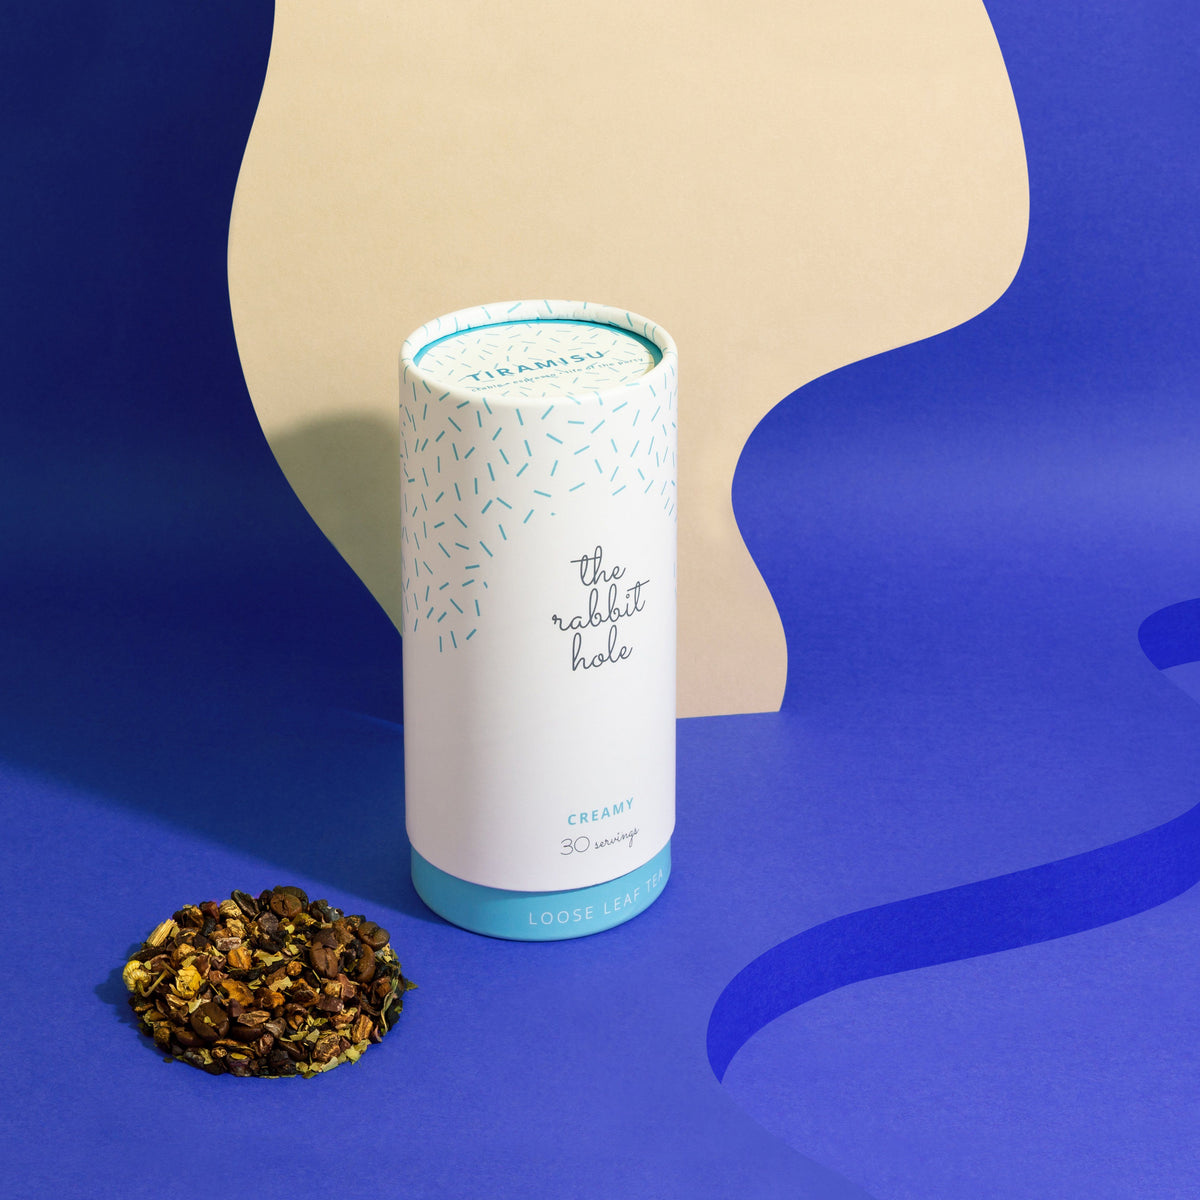 Tiramisu Creamy loose leaf tea by The Rabbit Hole - Australian Made Tea  - canister on a bright purple blue background